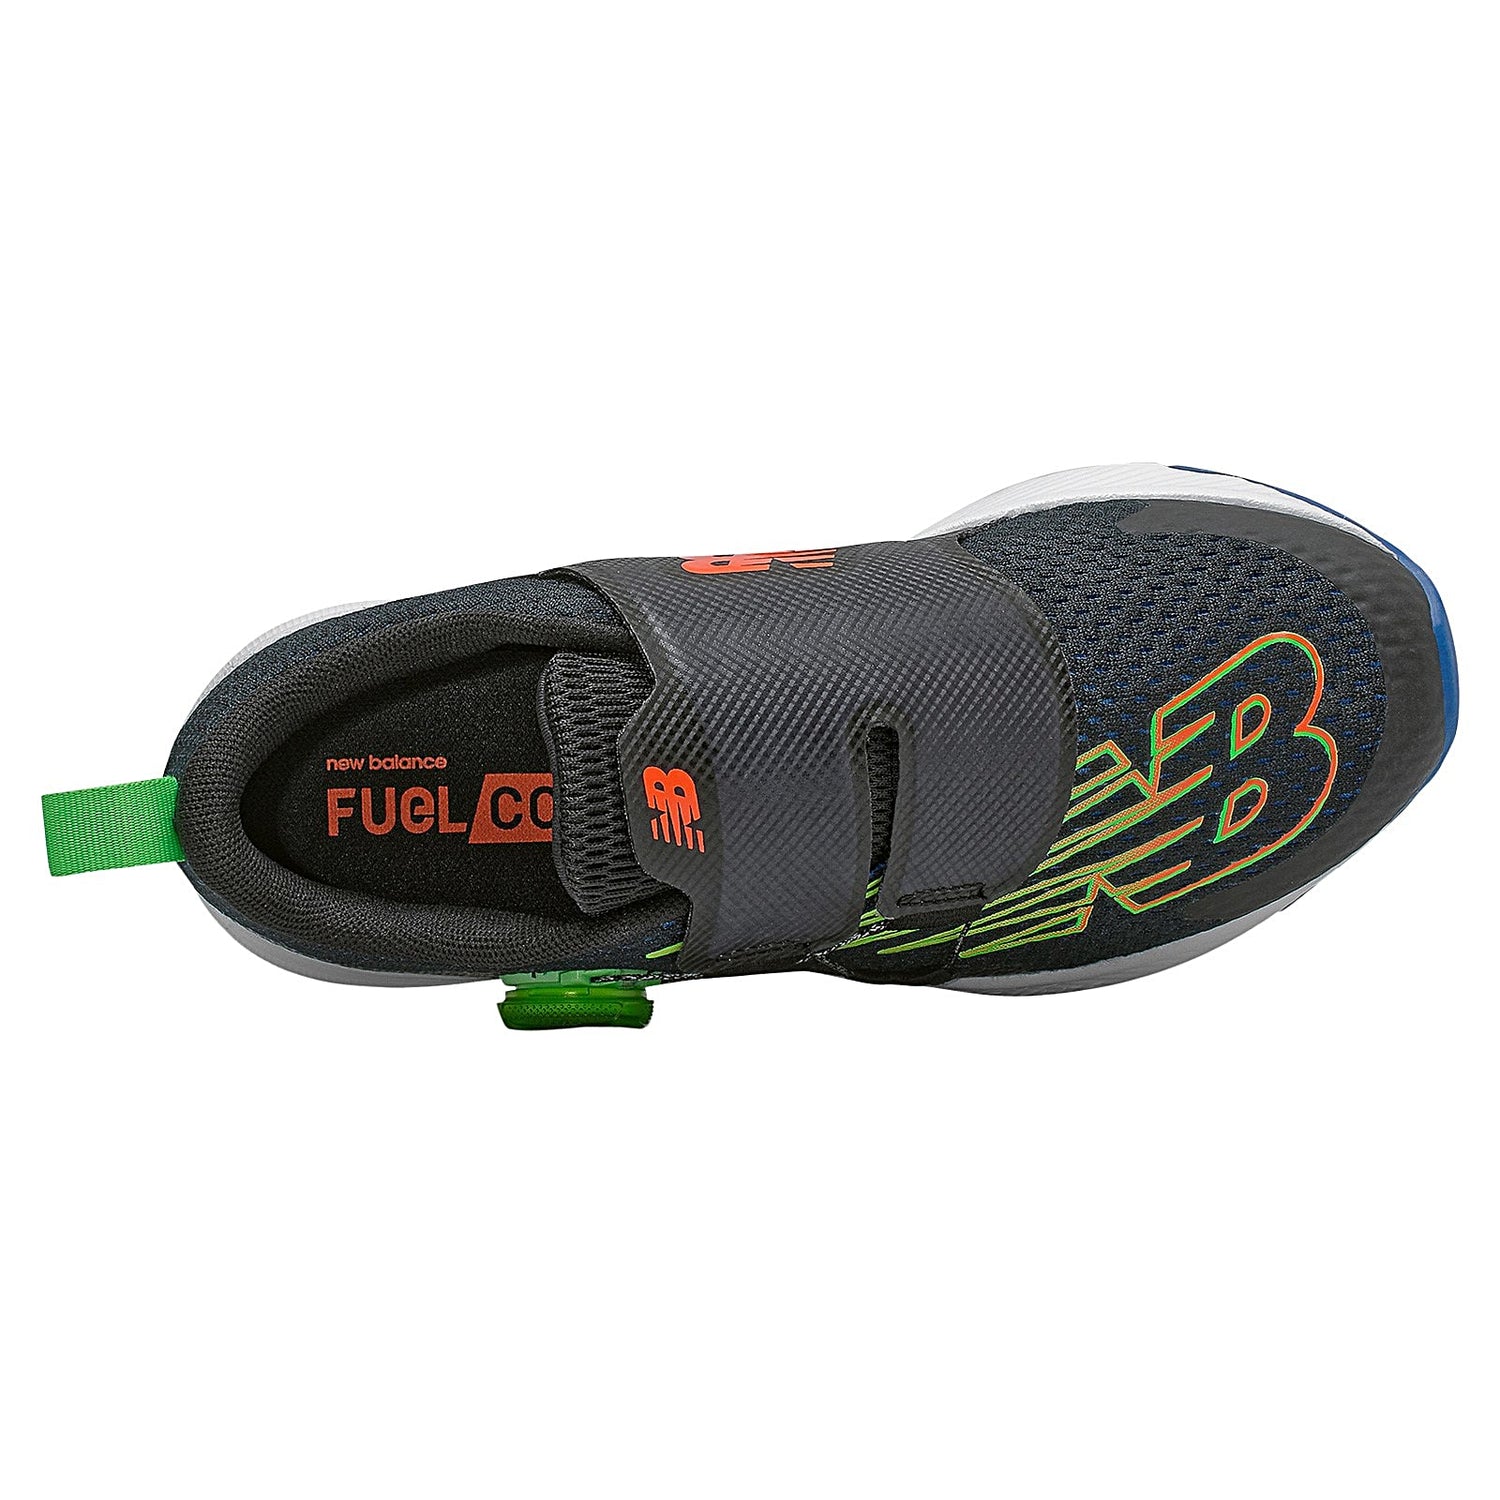 Peltz Shoes  Boy's New Balance Fuel Core Reveal v3 Sneaker - Big Kid